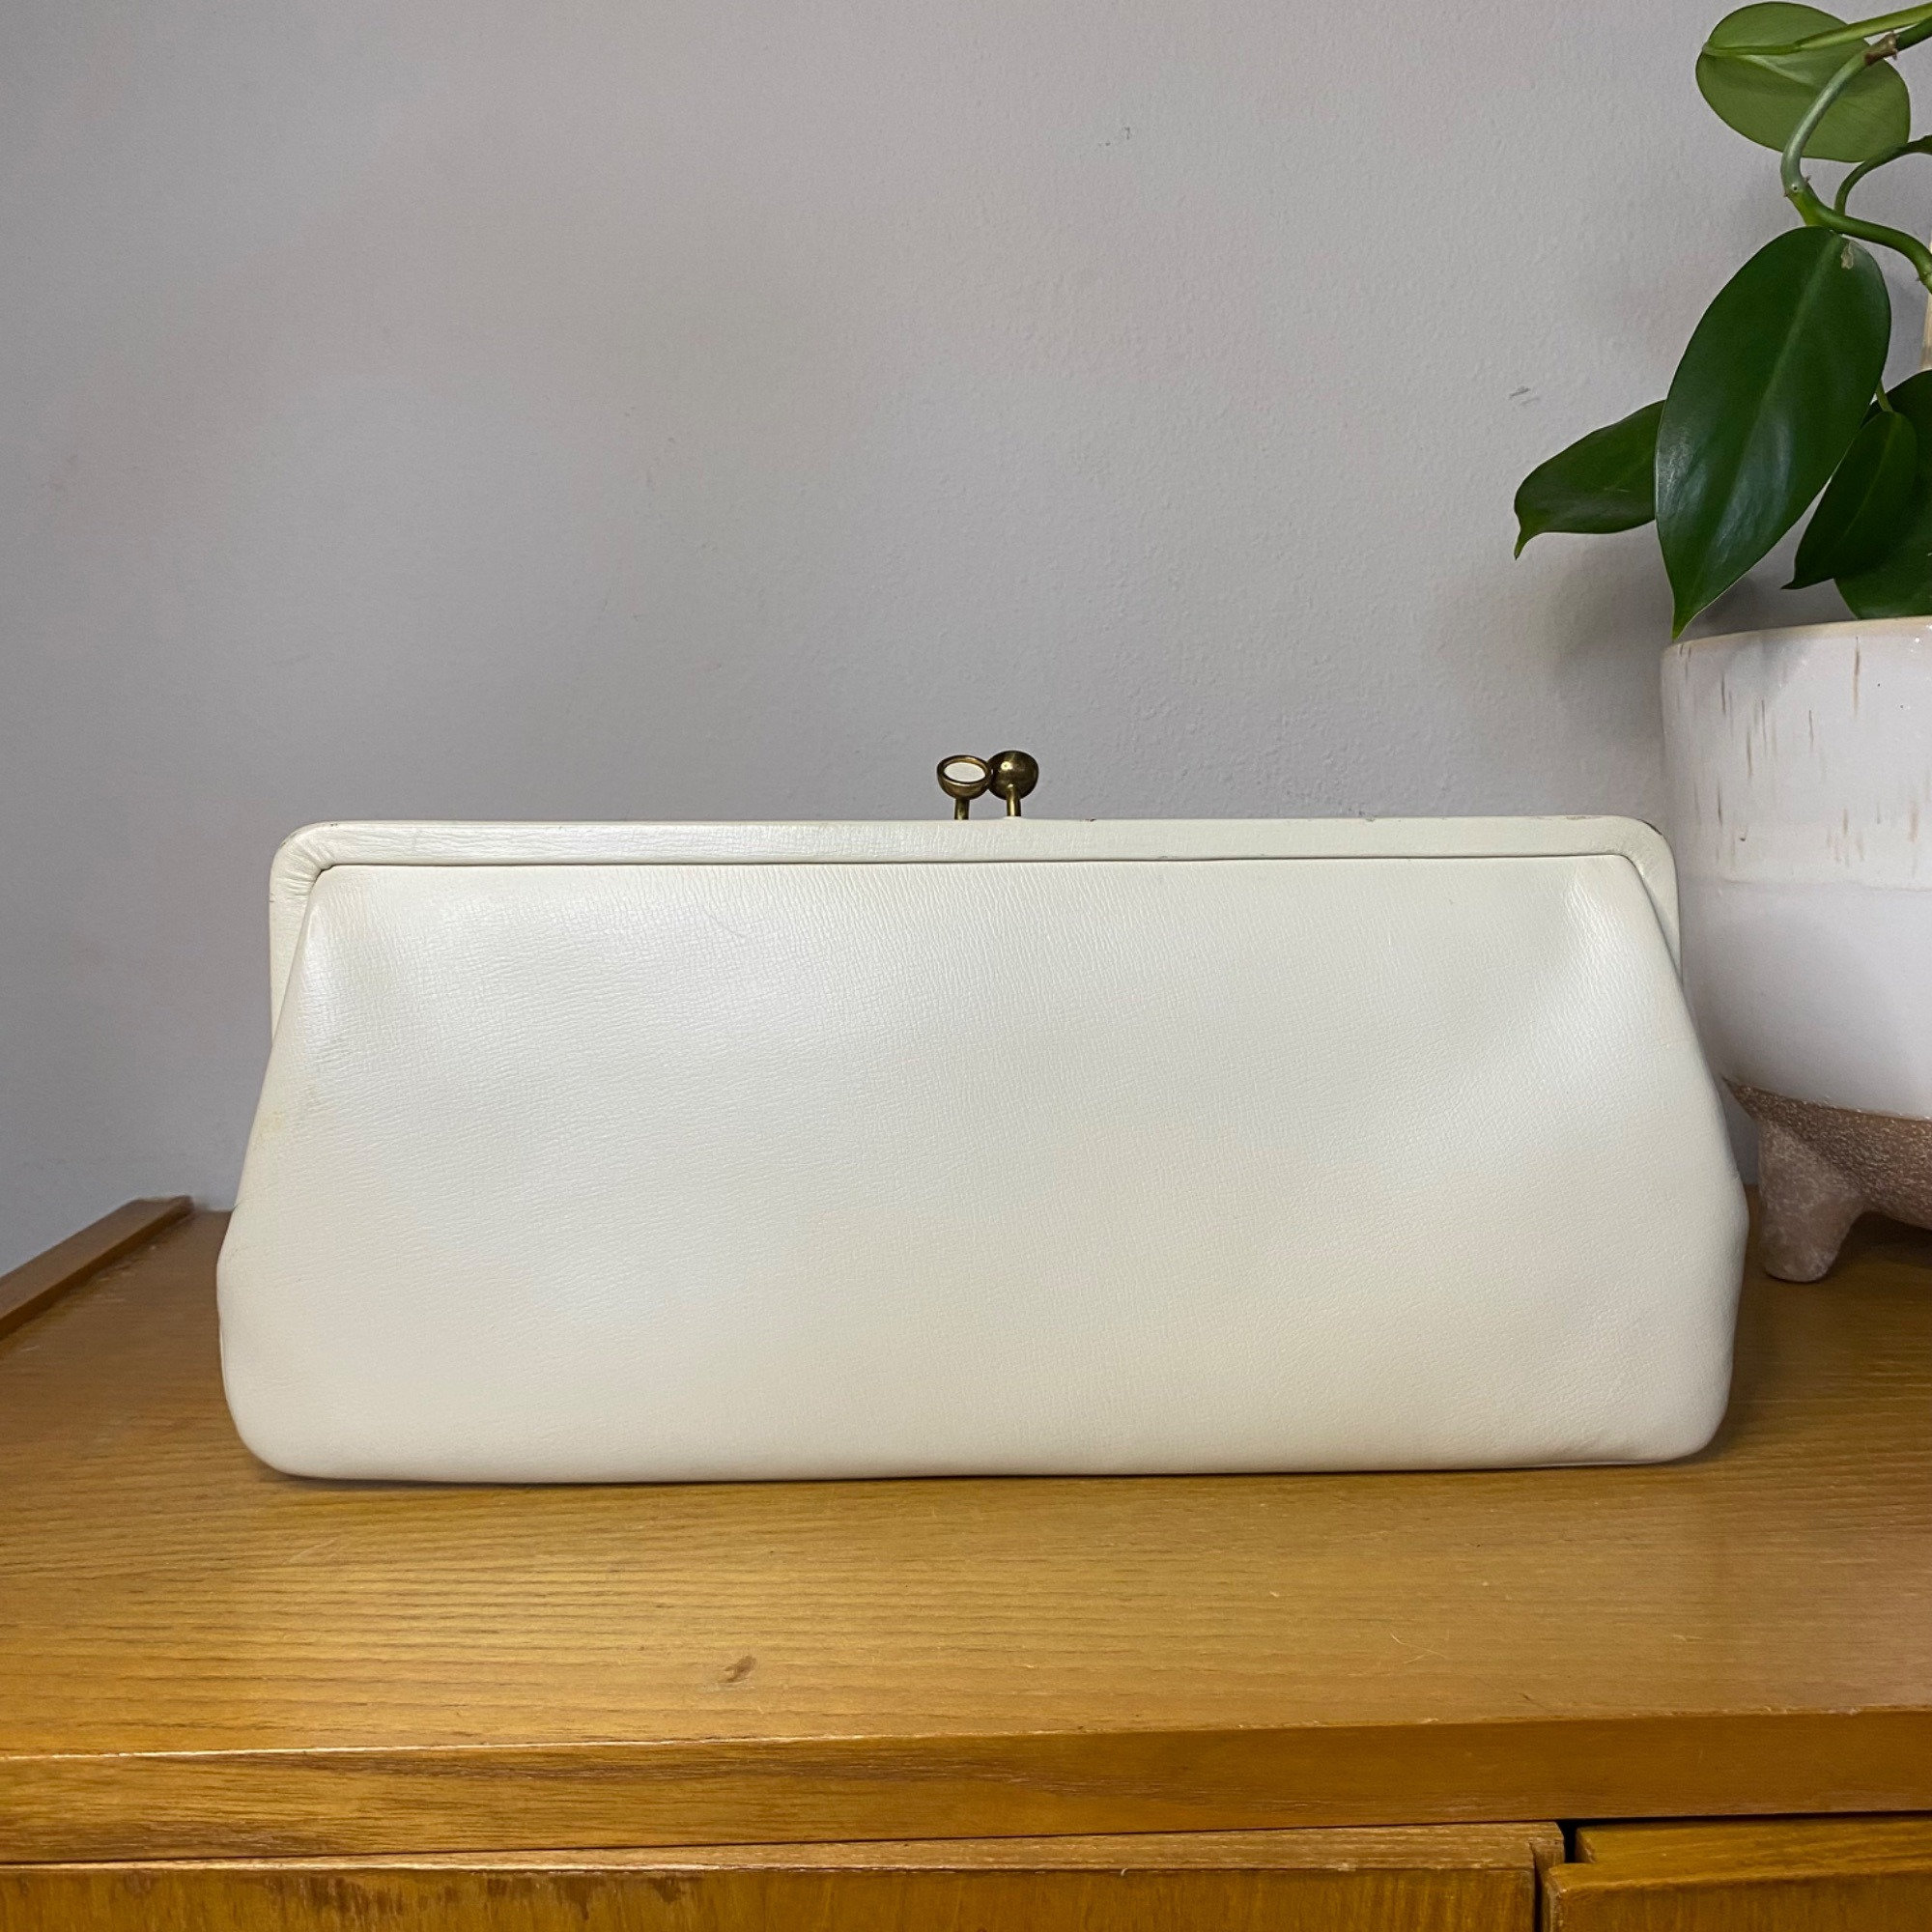 1950s Handbags, Purses, and Evening Bag Styles | Vintage handbags, Vintage  purses, Purses and handbags